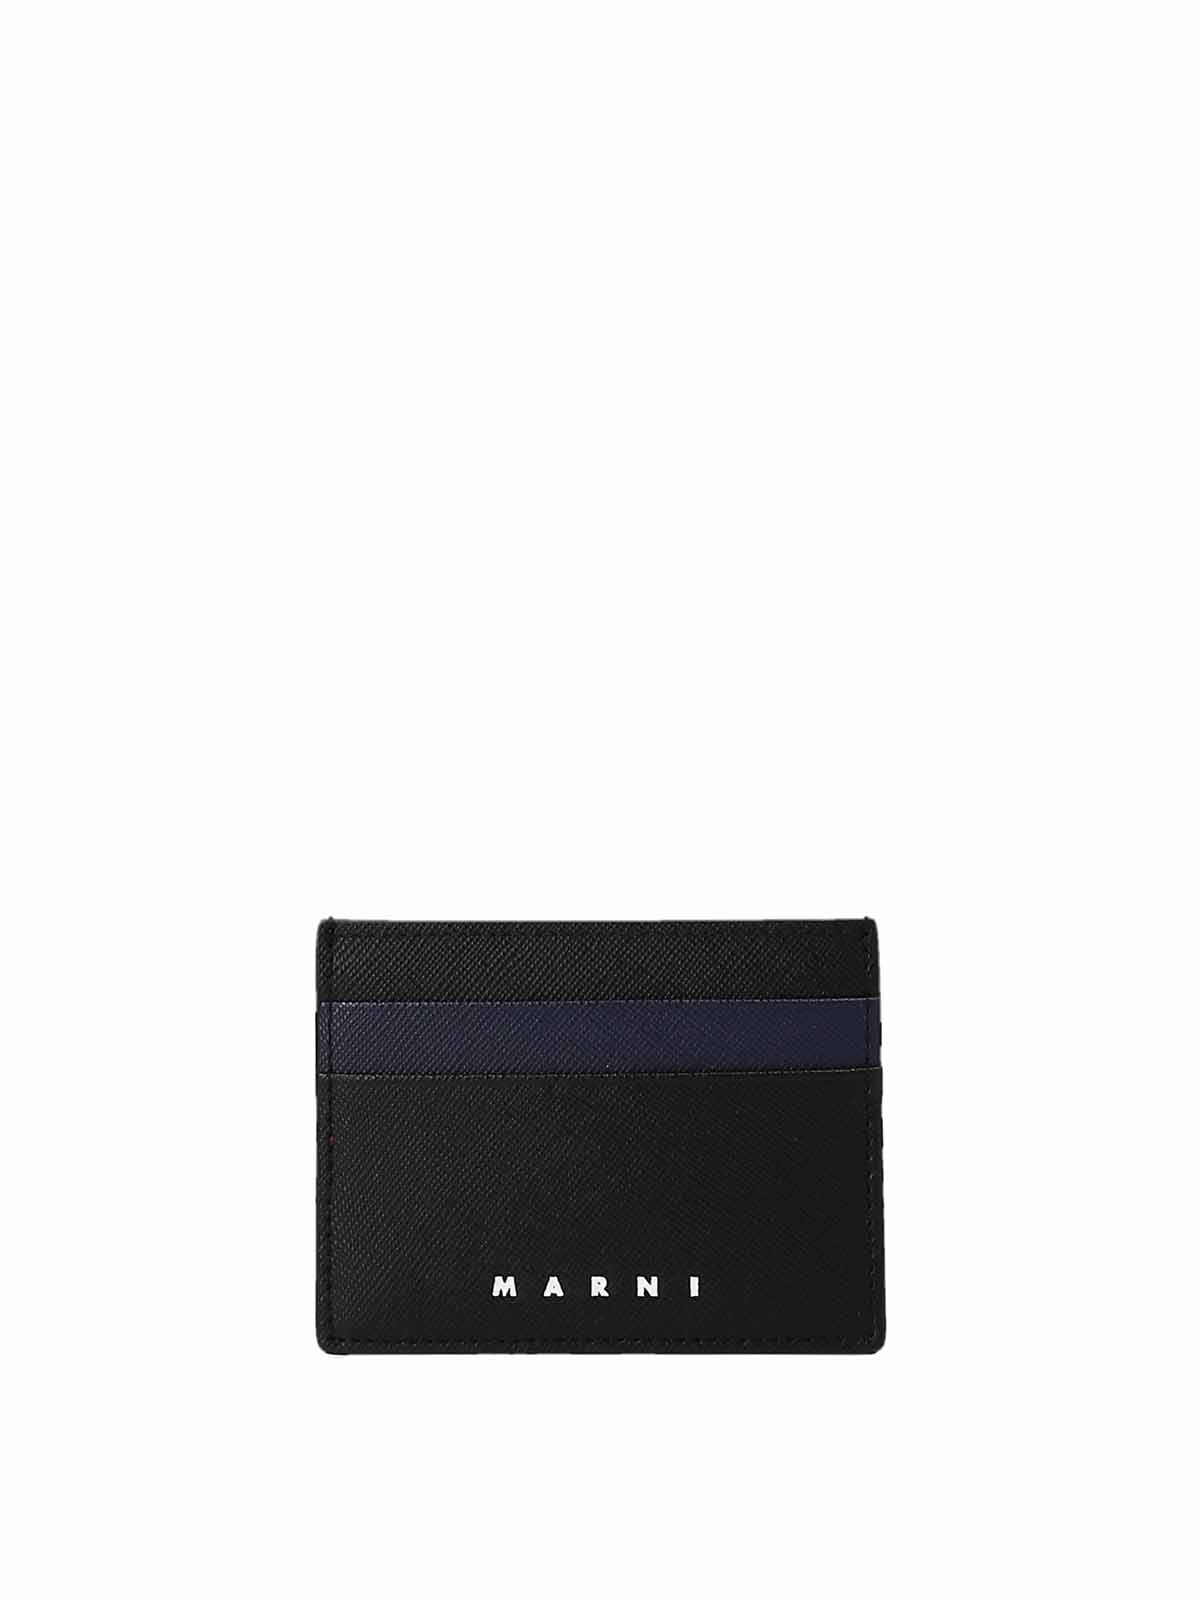 Marni Logoed Card Holder In Black